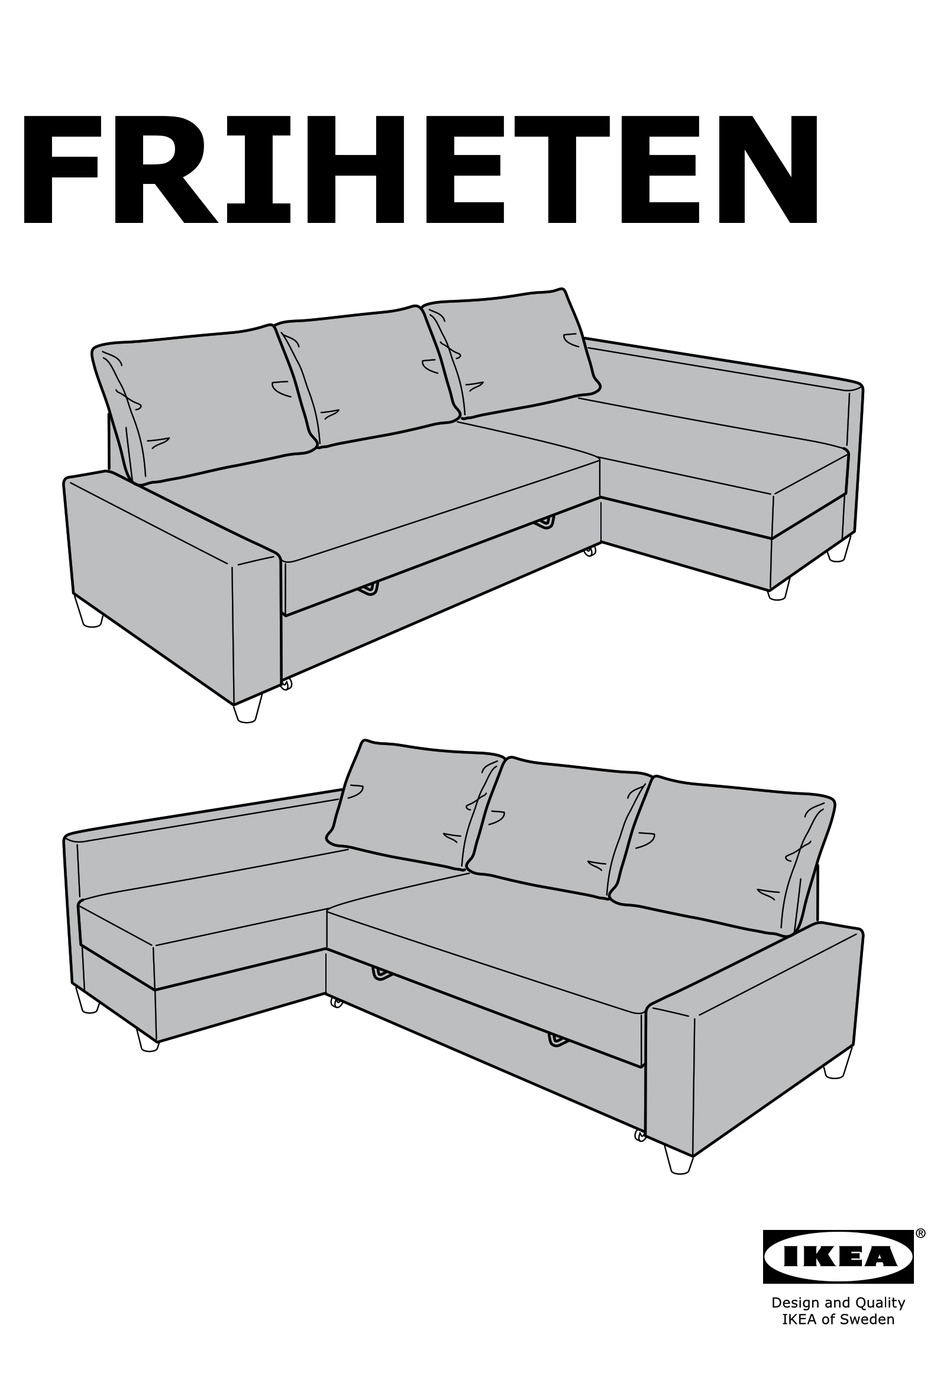 Ikea Friheten Assembly Instructions, Friheten Sofa Bed Assembly Instructions